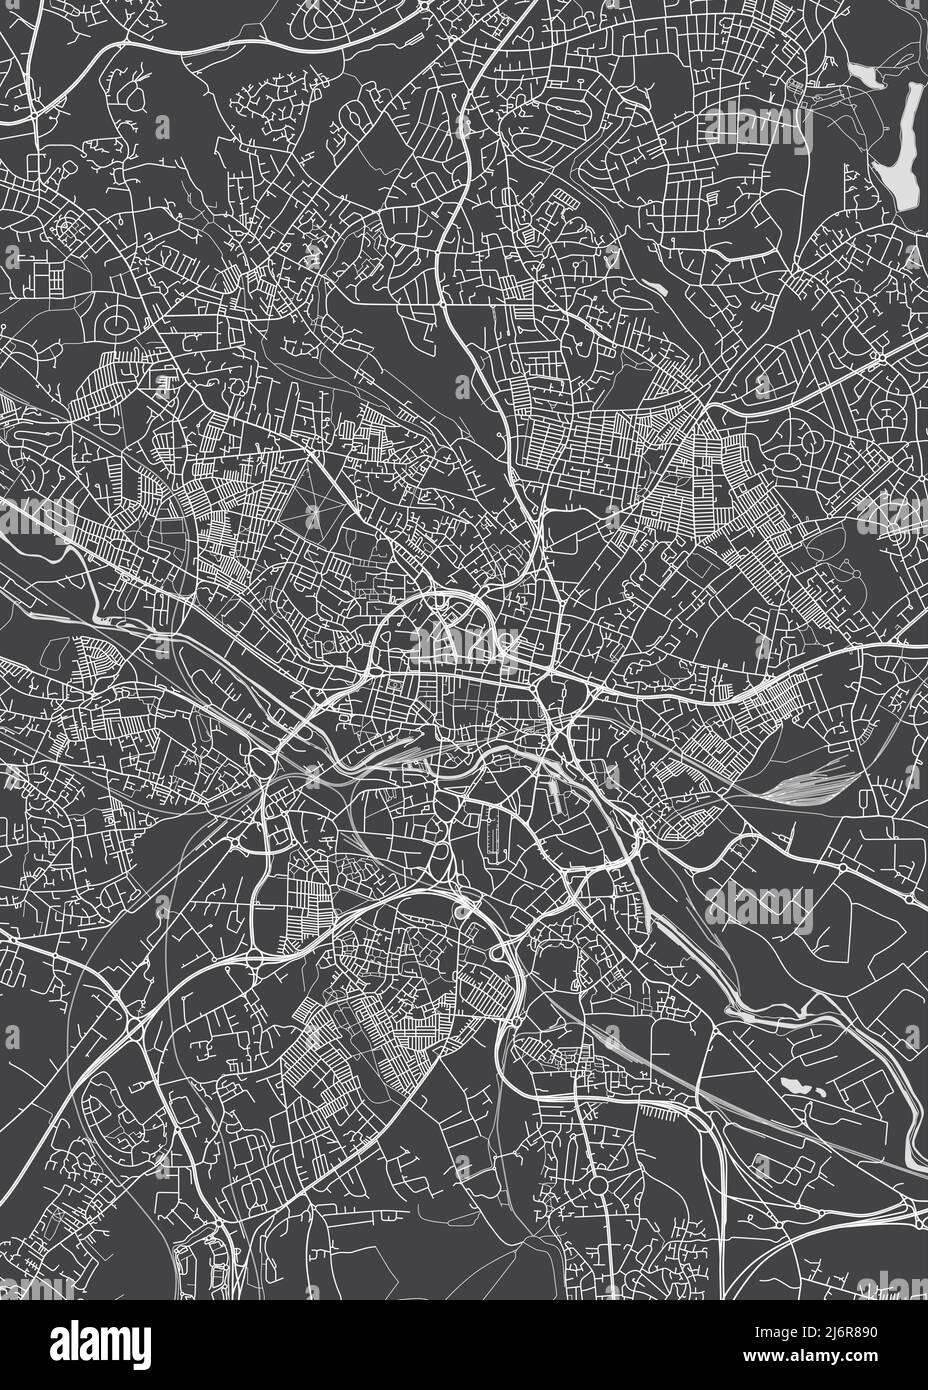 Stadtplan Leeds, monochromer Detailplan, Vektorgrafik Stock Vektor